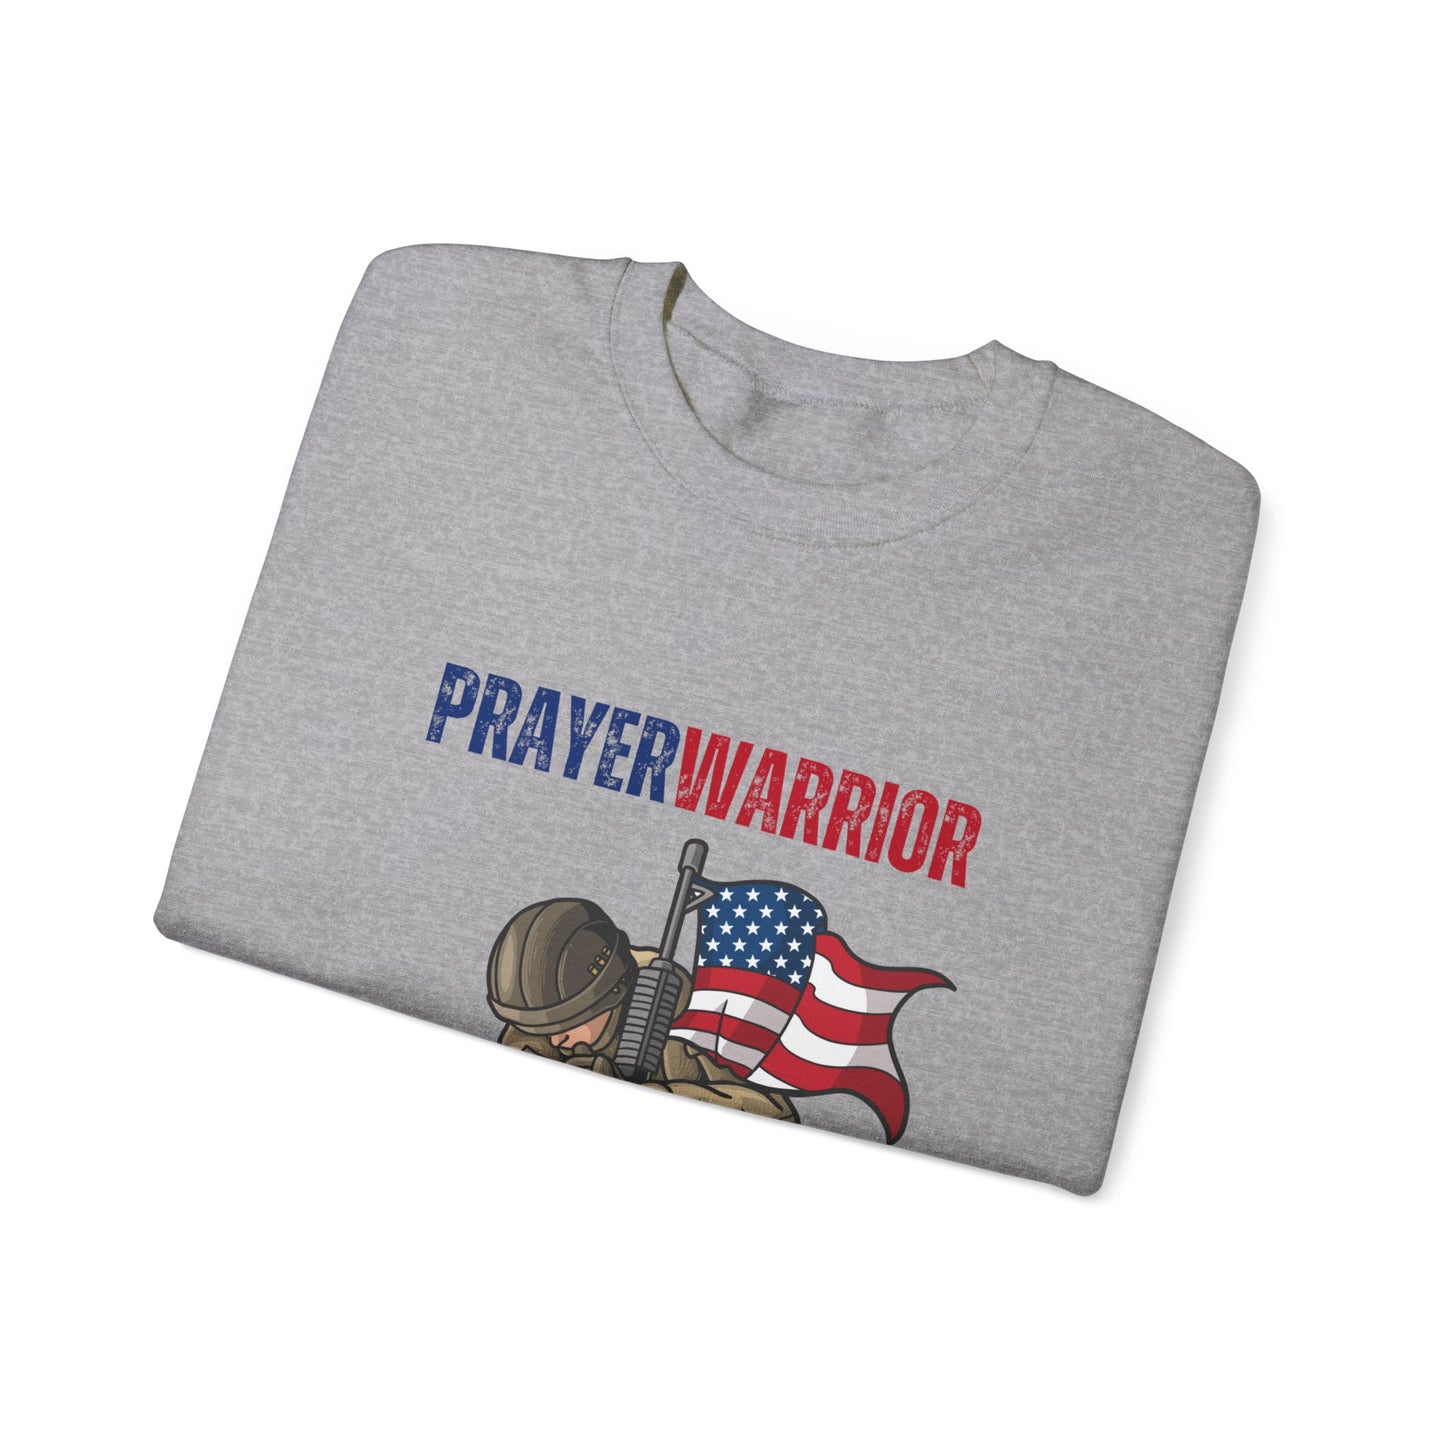 Prayer Warrior Soldier Men's Sweatshirt